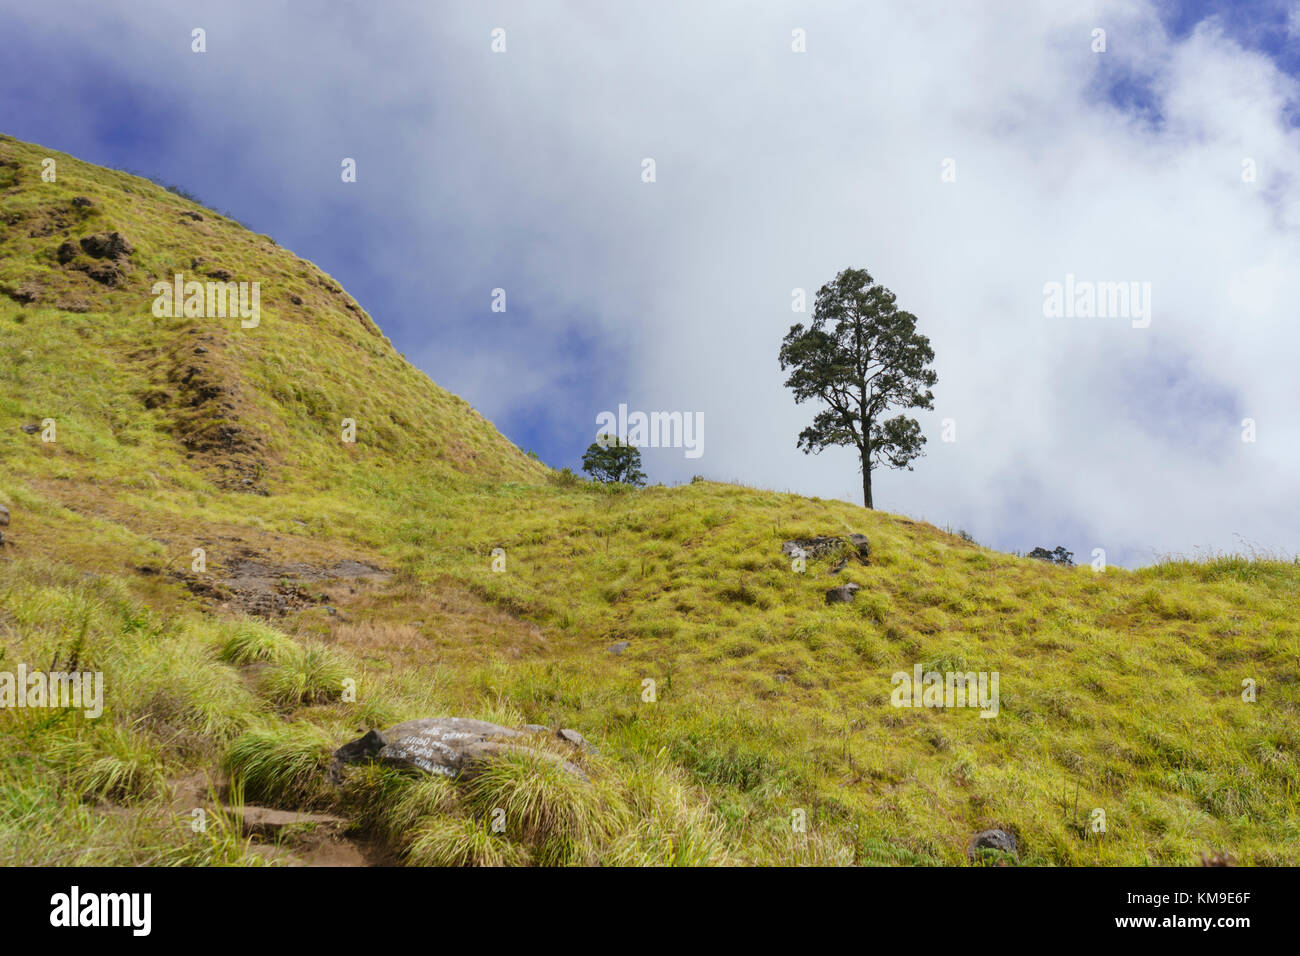 Rural landscape, Mount Rinjani, Lombok, Indonesia Stock Photo